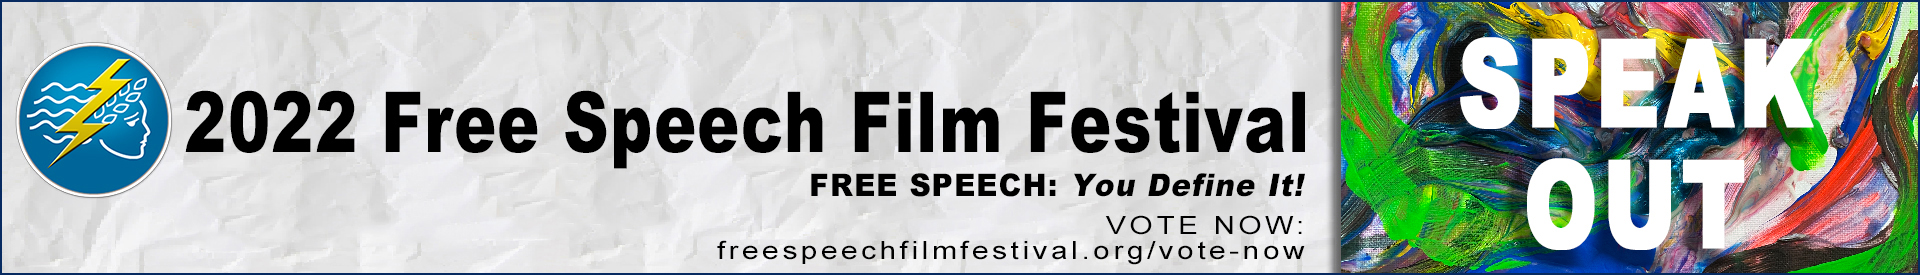 2022 Free Speech Film Festival